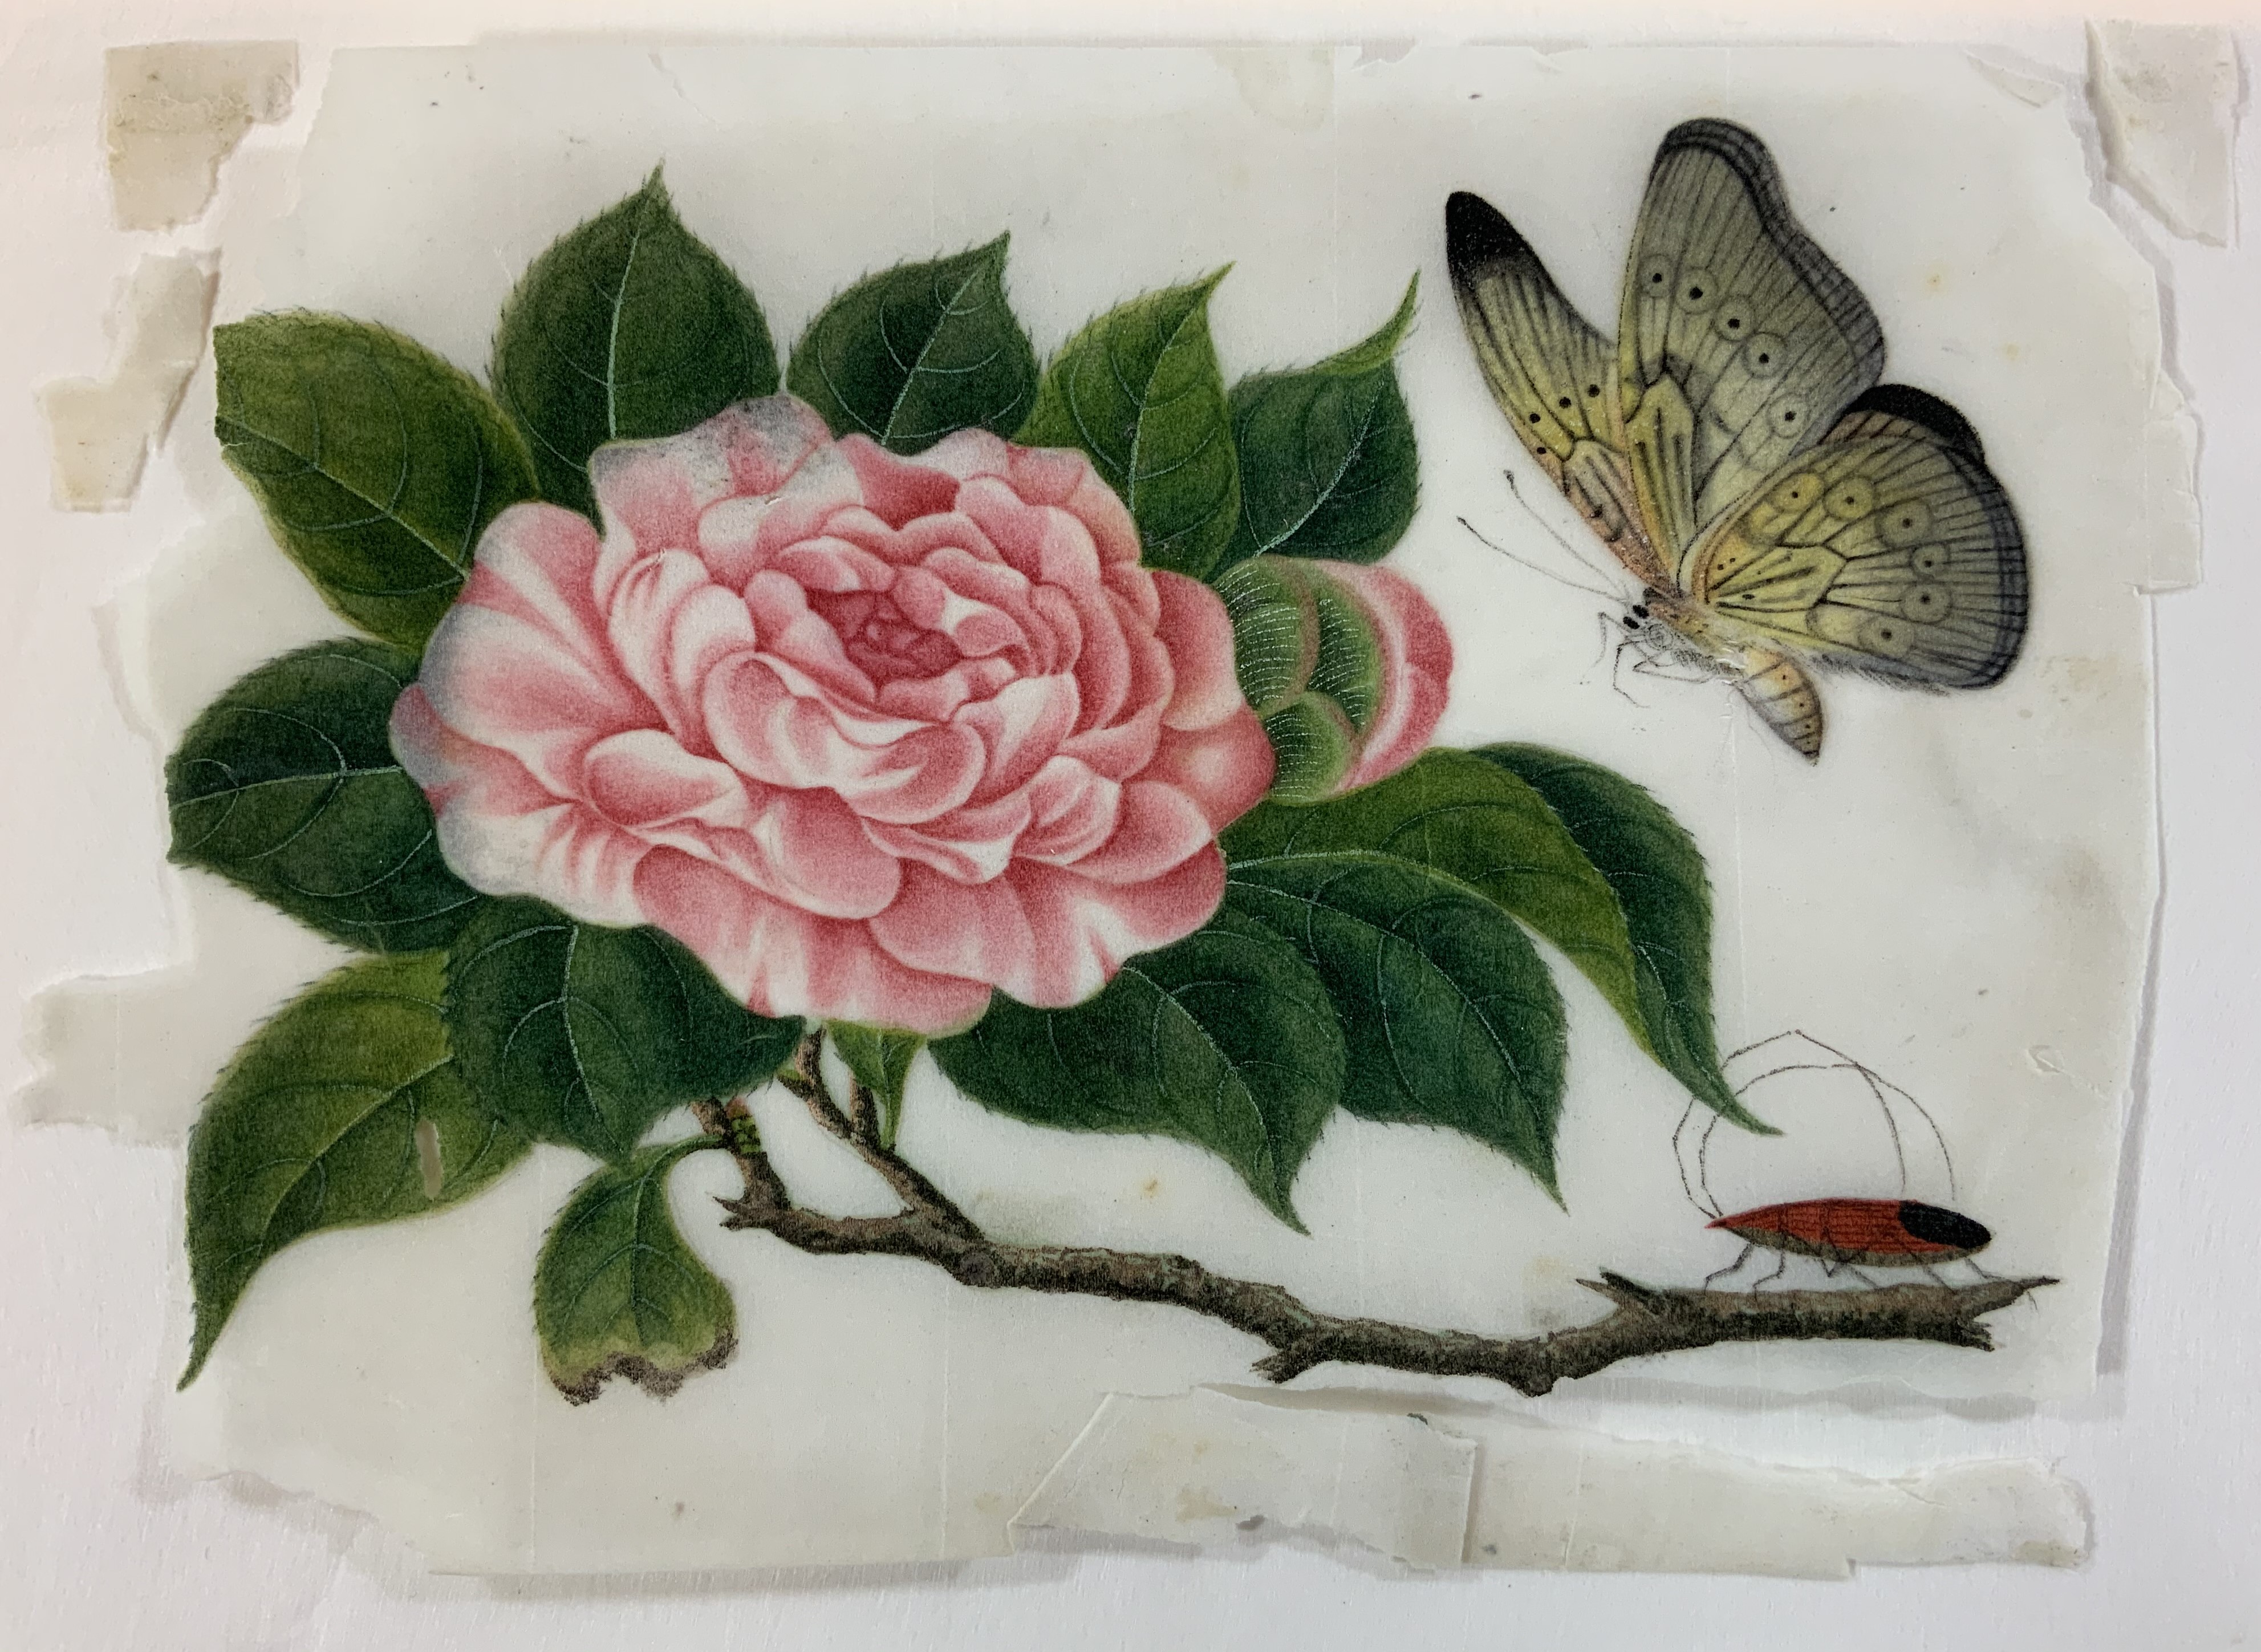  29367 Botanical Gouaches on Pith Paper Album ca. 1840